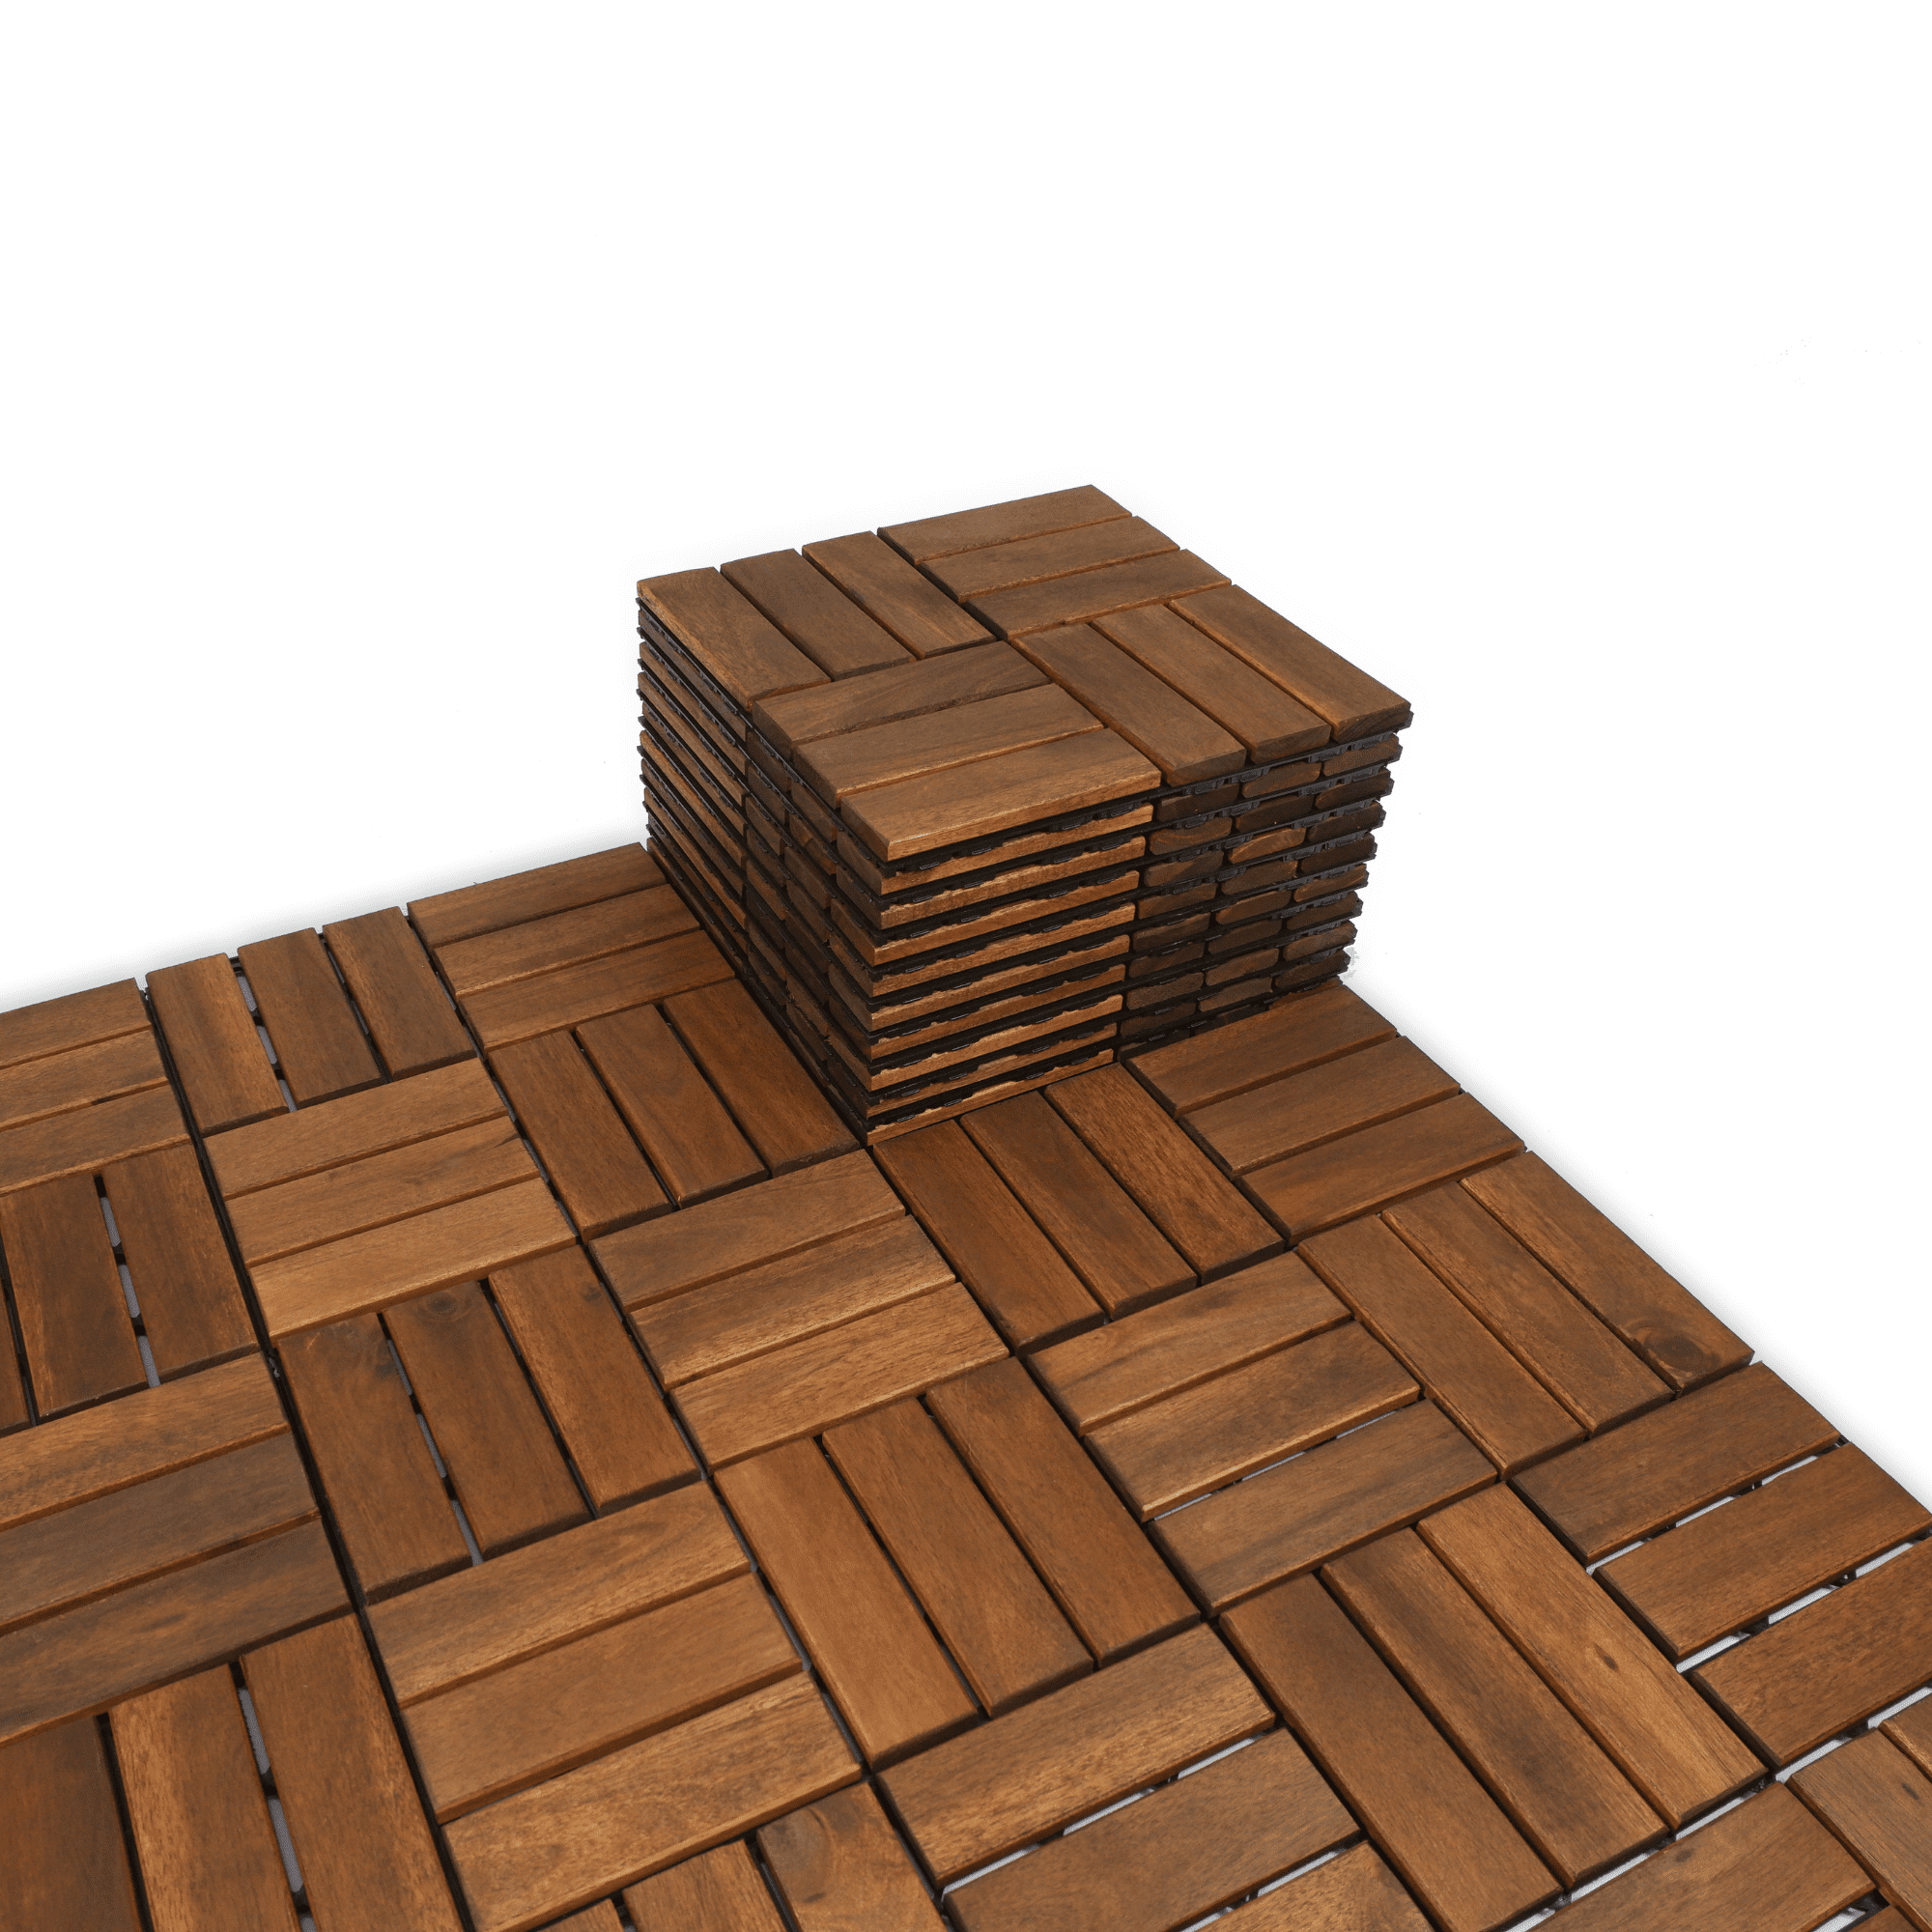 IncStores - Foam Tiles (Rainbow, 6 Tiles) - 2ft x 2ft Economy Class Interlocking Tiles Are Ideal for